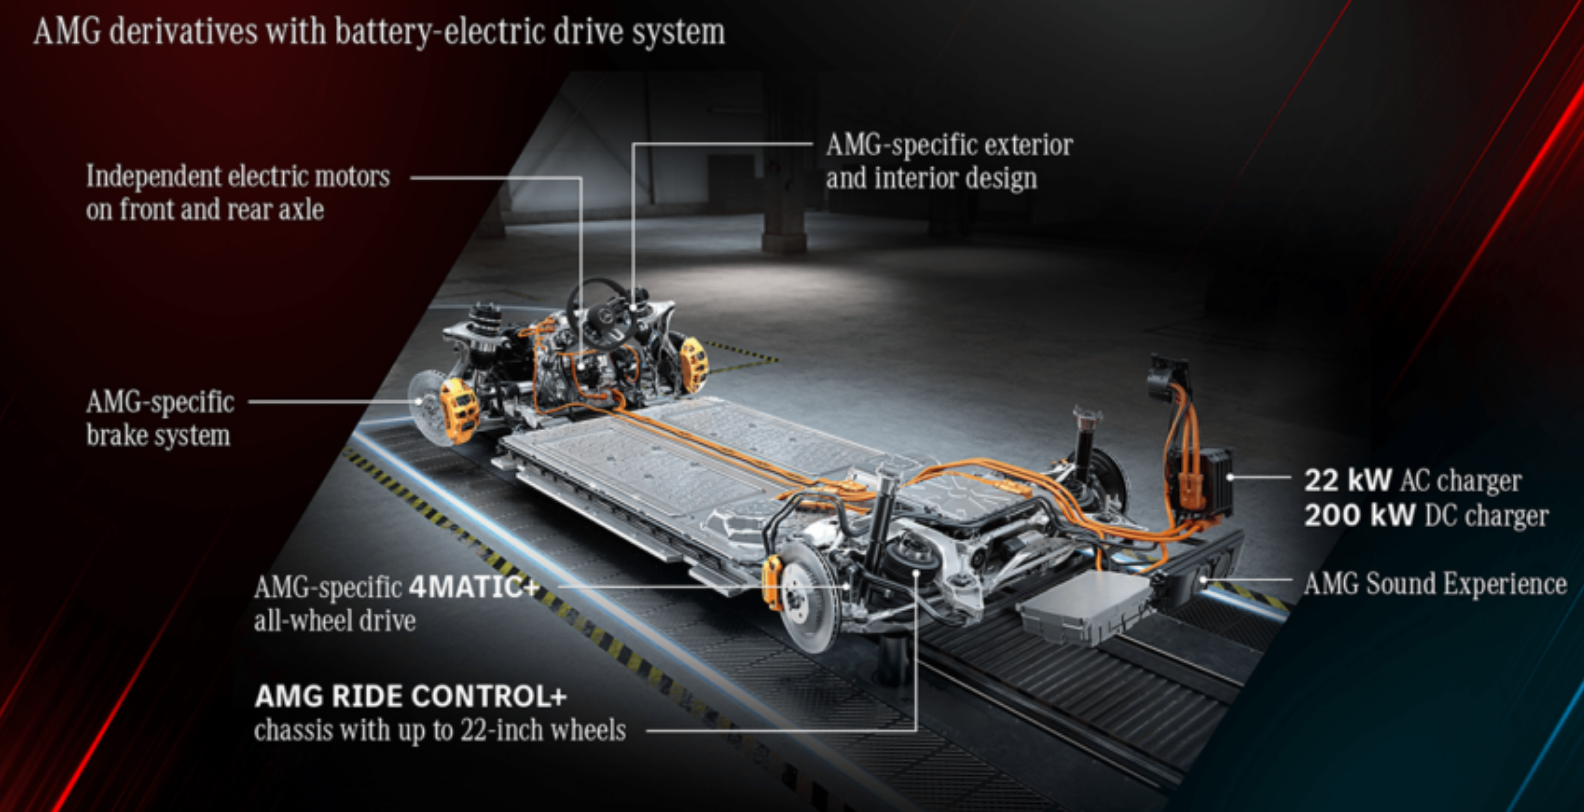 Mercedes-AMG reveals electrification strategy